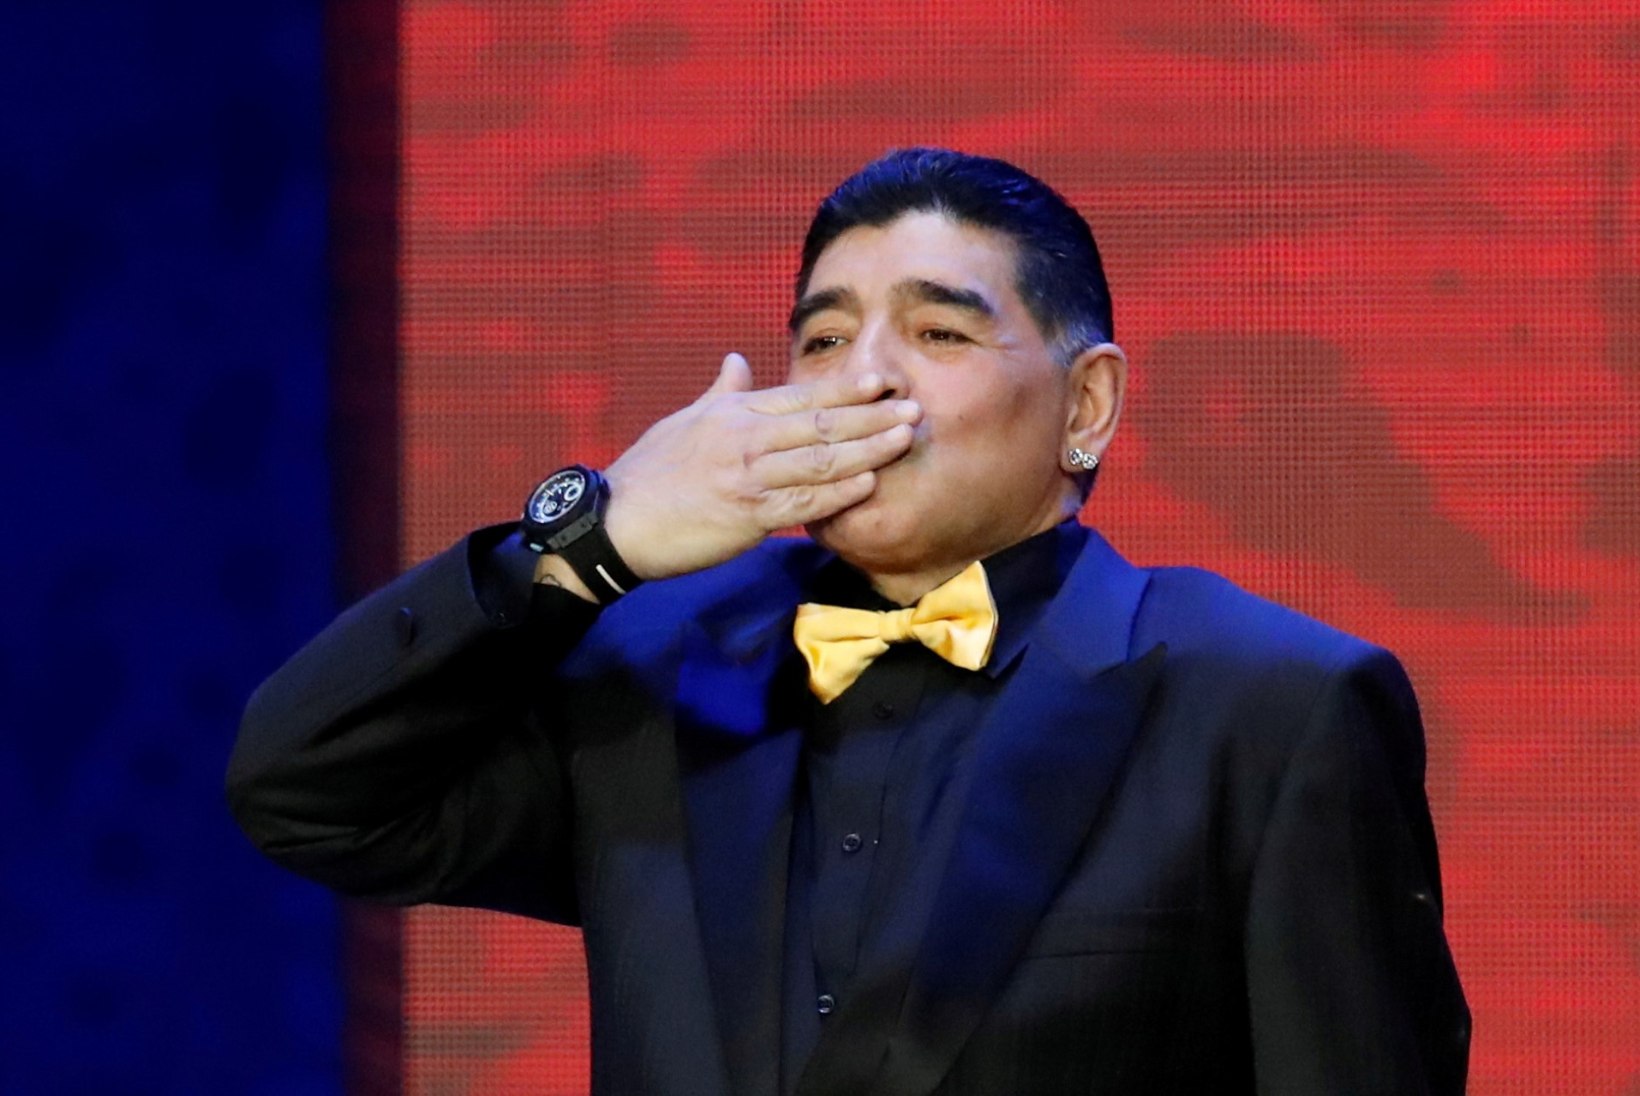 Suri jalgpallilegend Diego Maradona